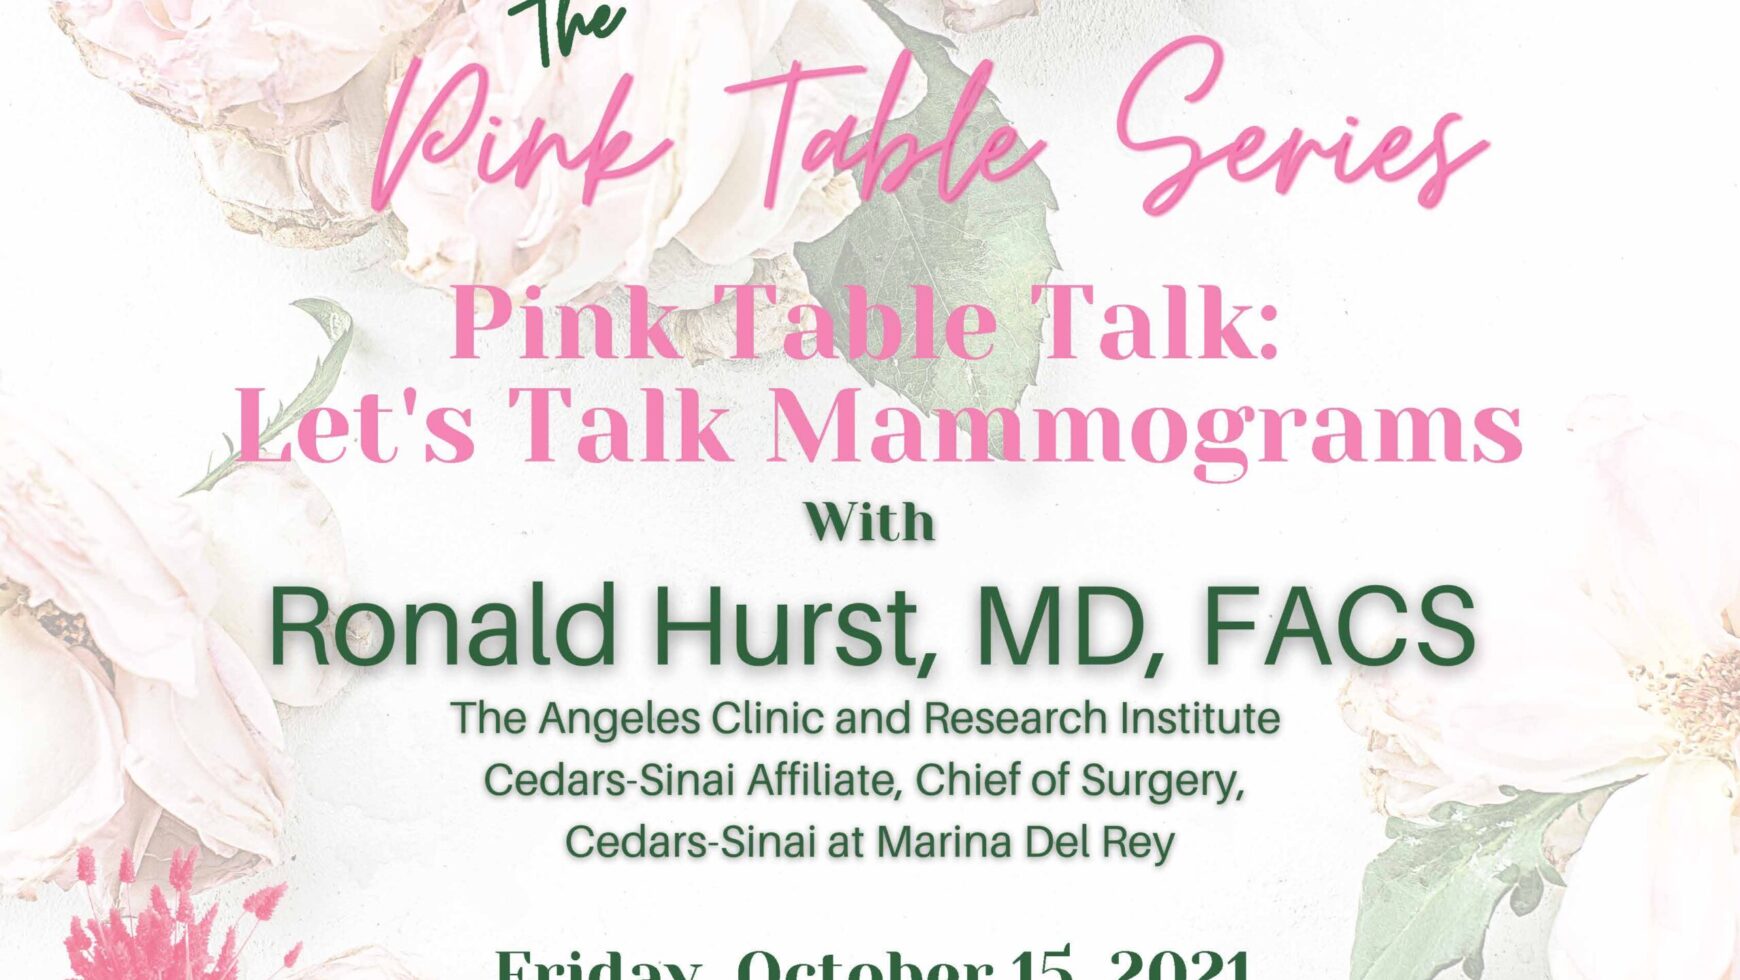 Pink Table Talk Series, Part II: Let’s Talk Mammograms